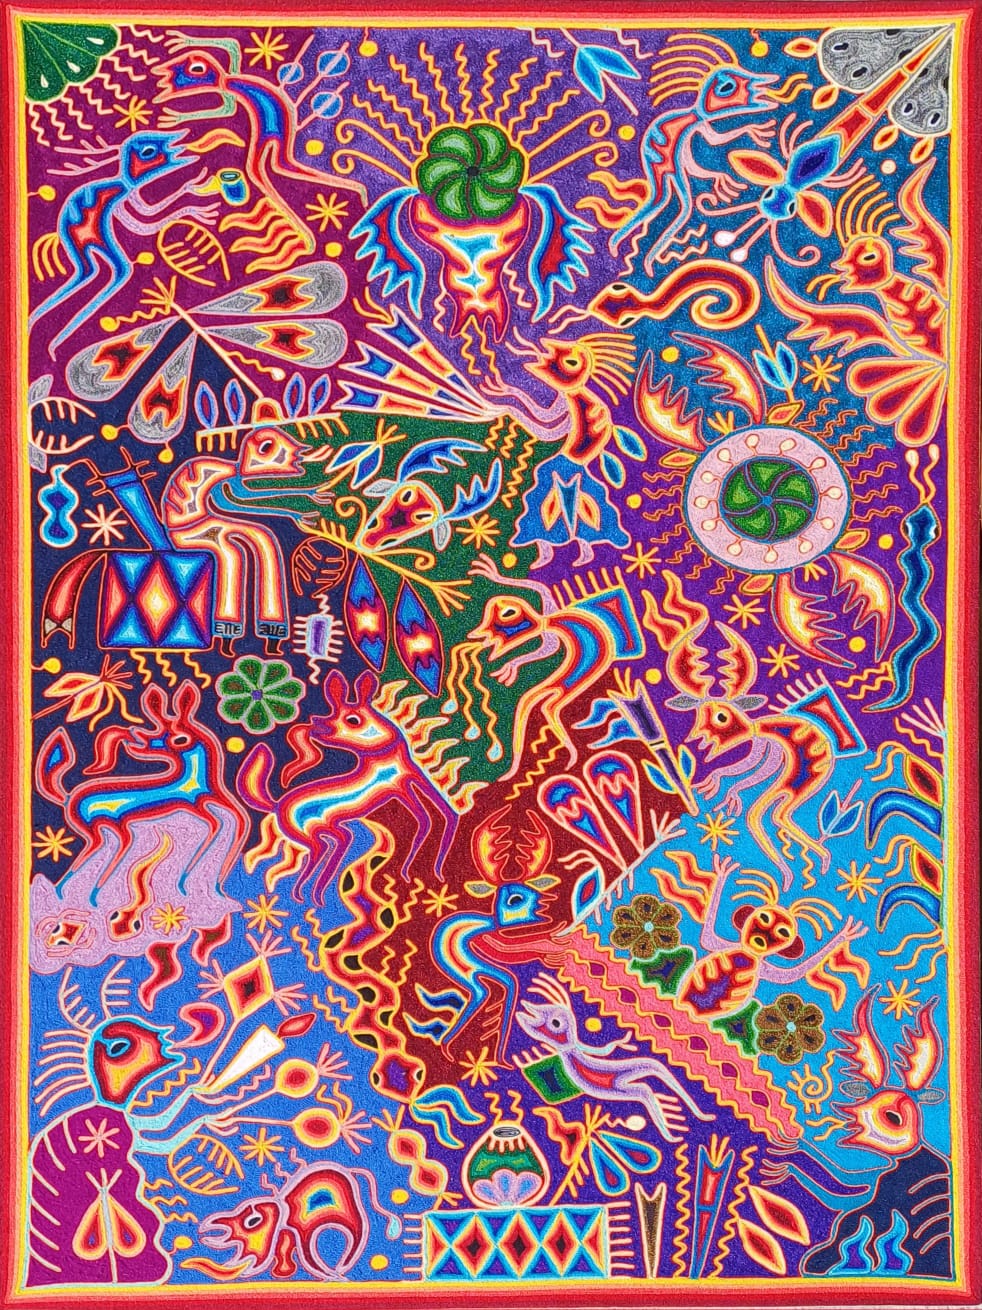 Huichol Yarn Painting Mexican Folk Art By Hilaria Chavez Carrillo PP7016